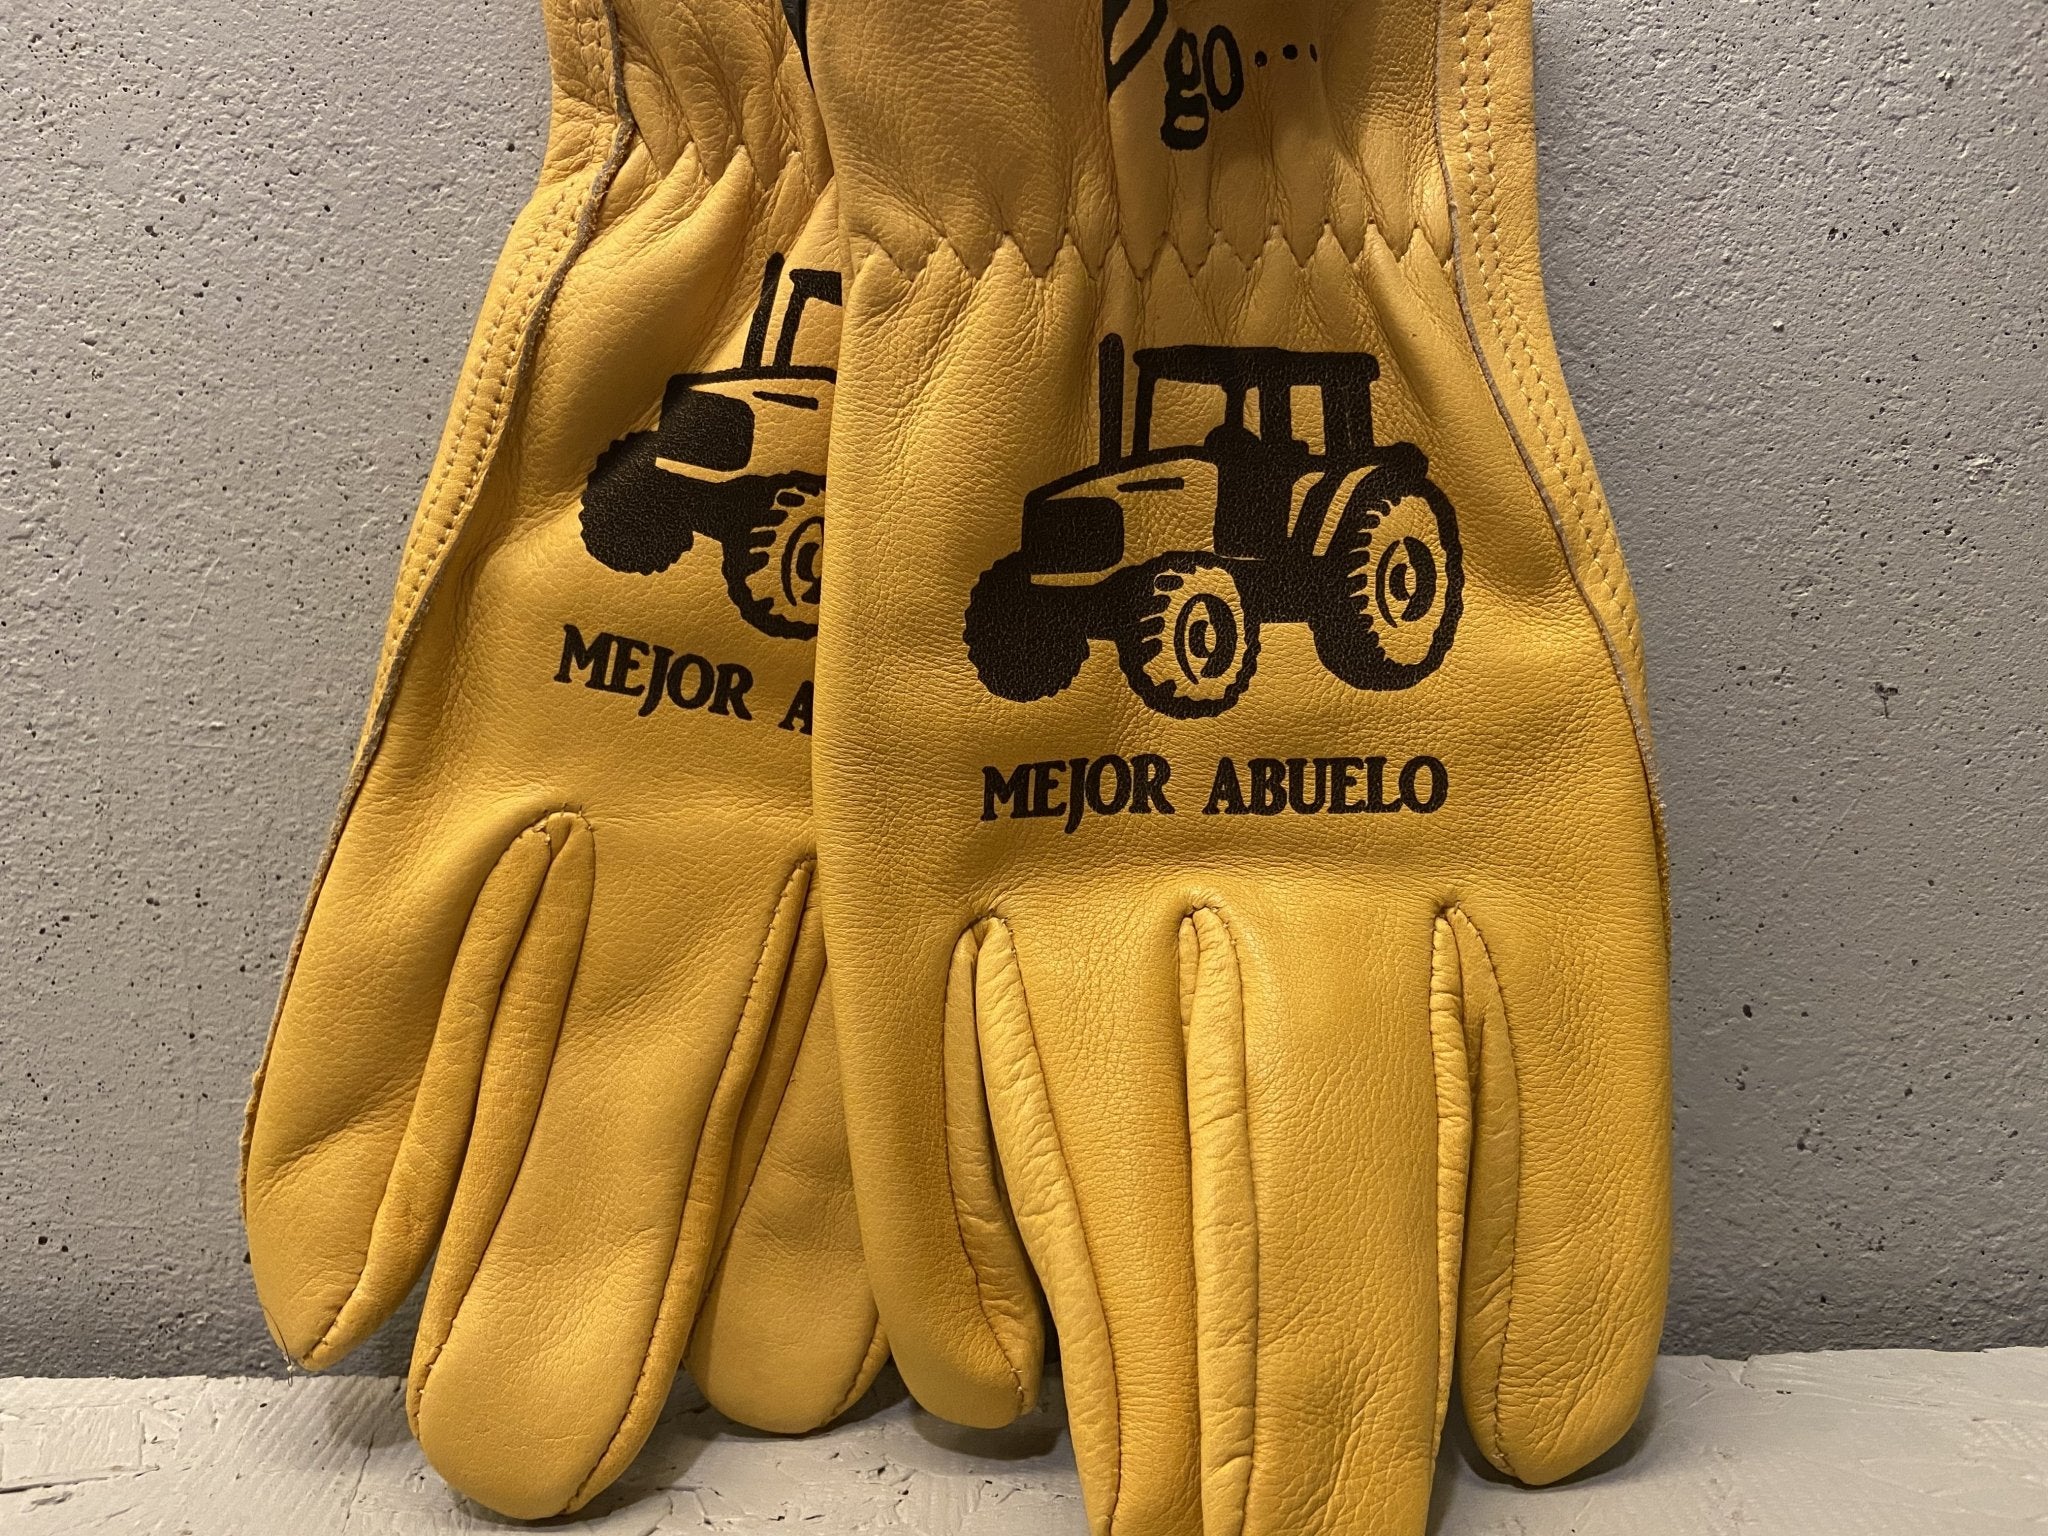 WORK GLOVES, Customized Personalized Gardening Working Gloves, Construction  Worker Gloves Gift for Men, Custom Work Gloves, Bible Verse 